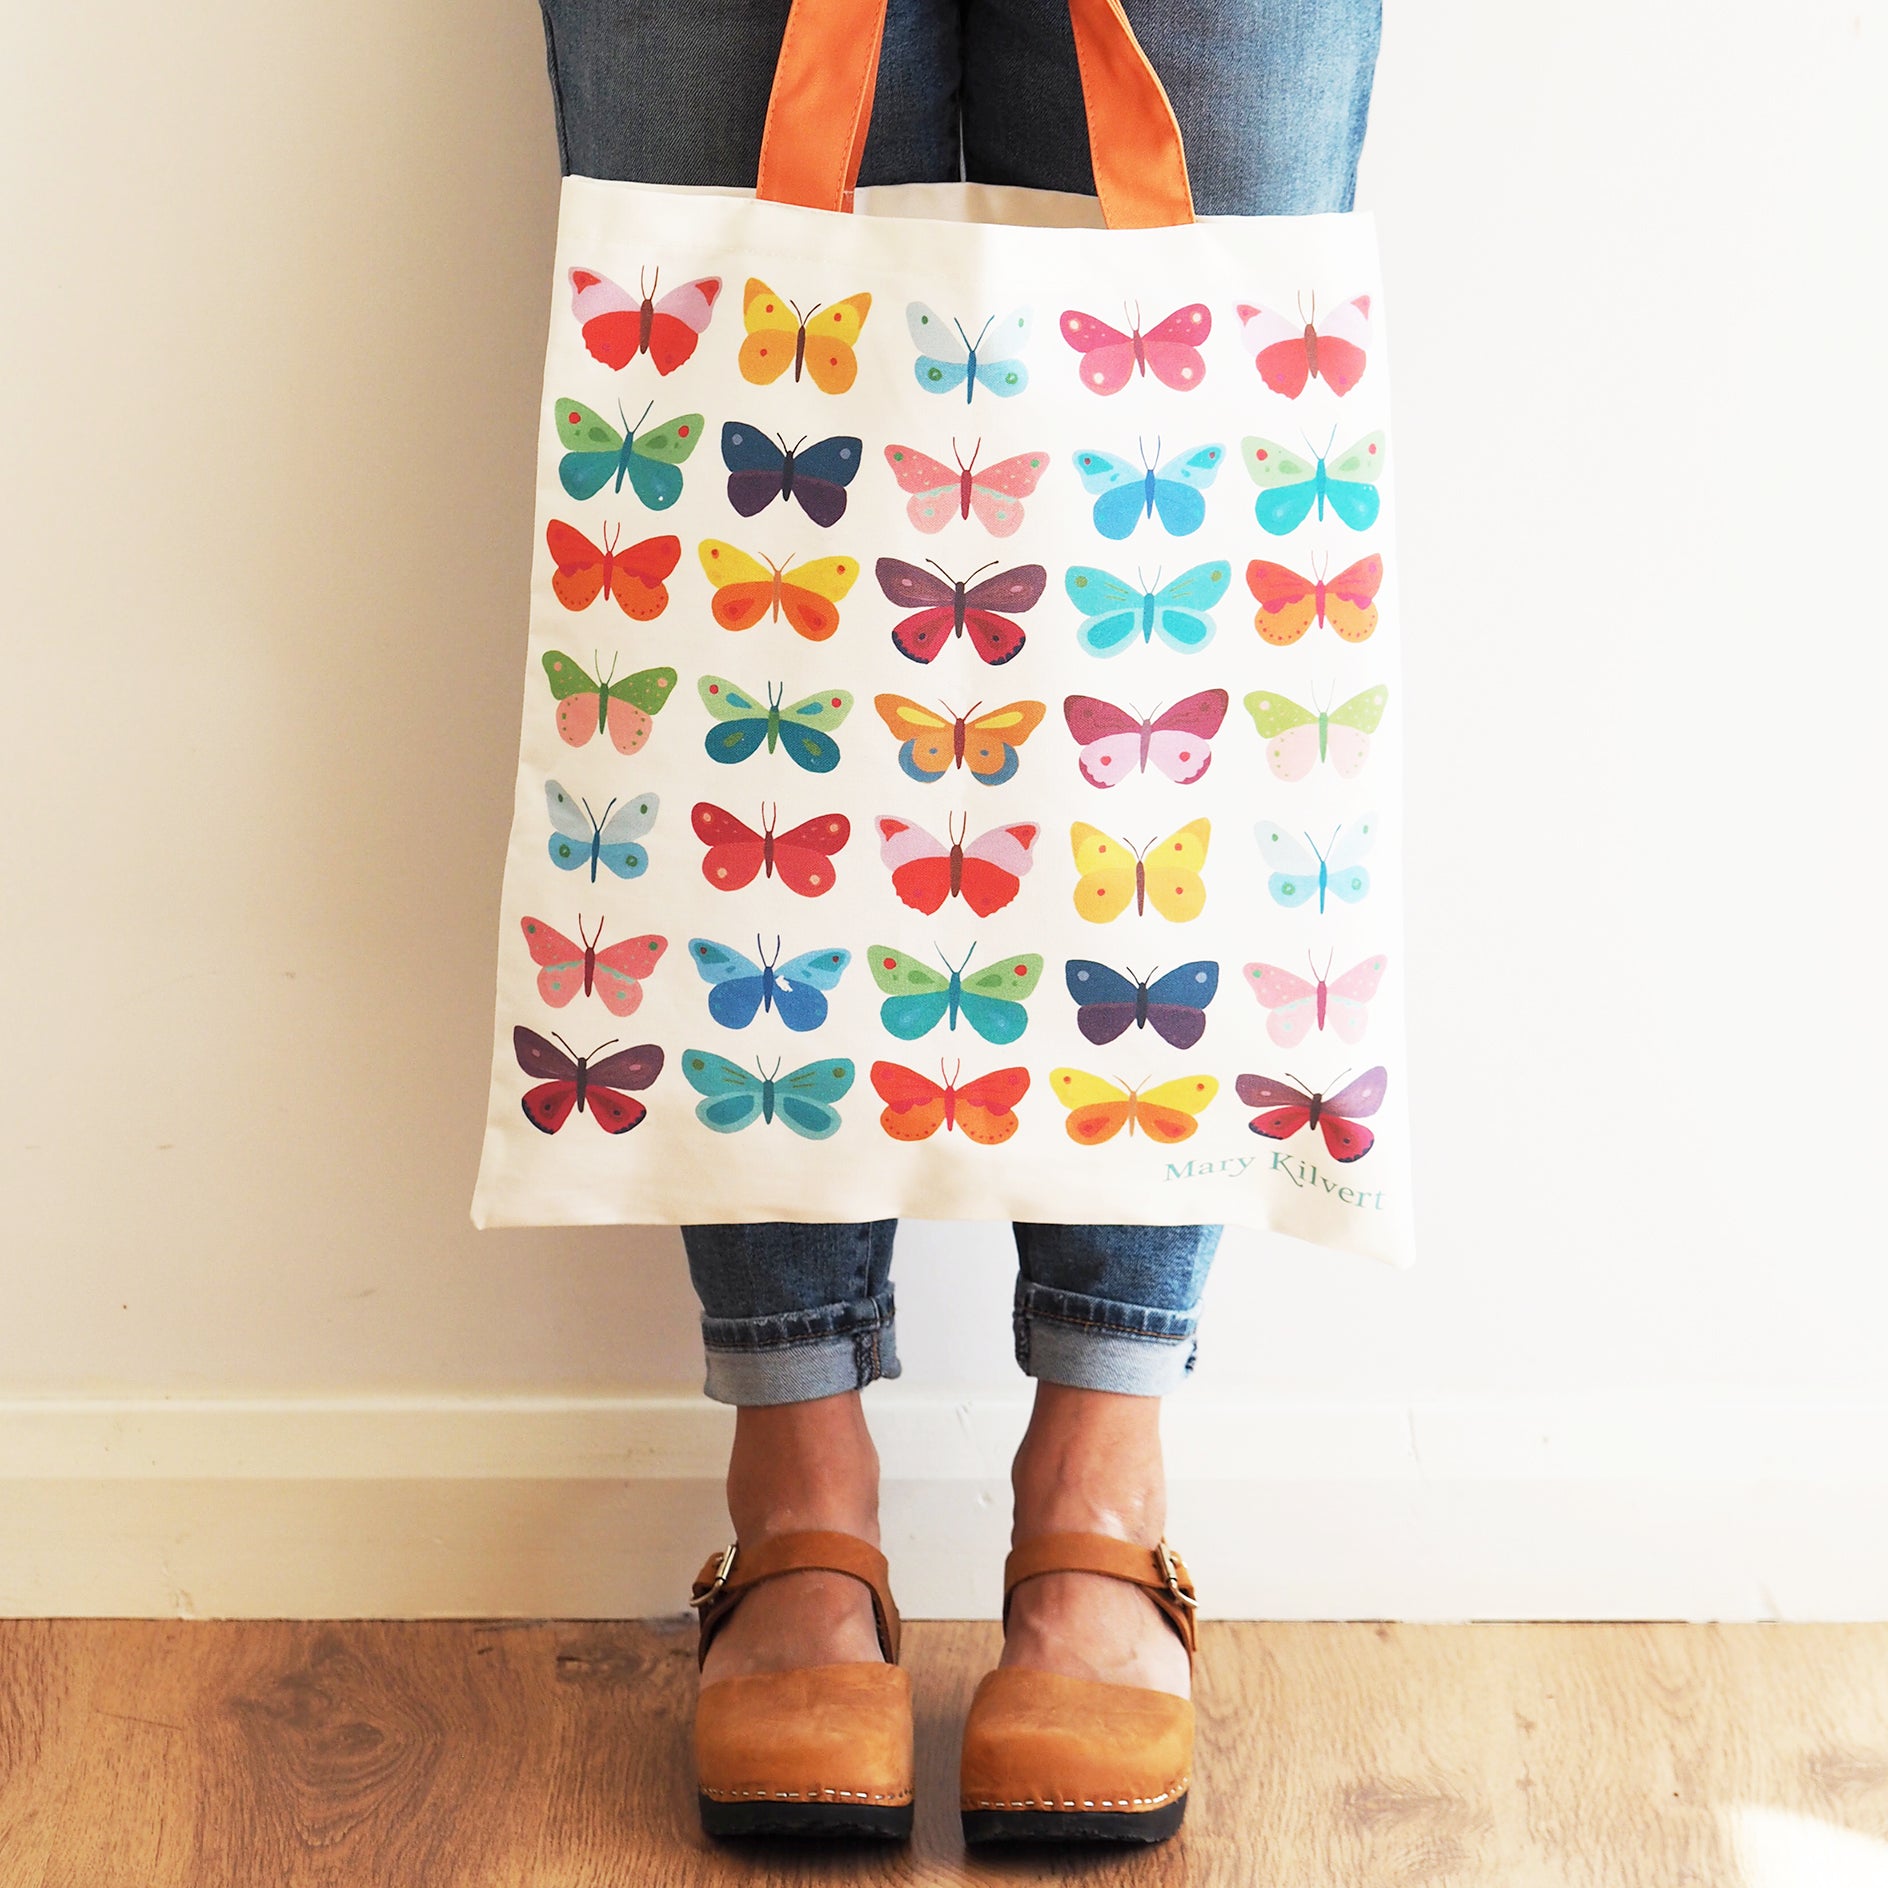 Butterfly Bag by Mary Kilvert